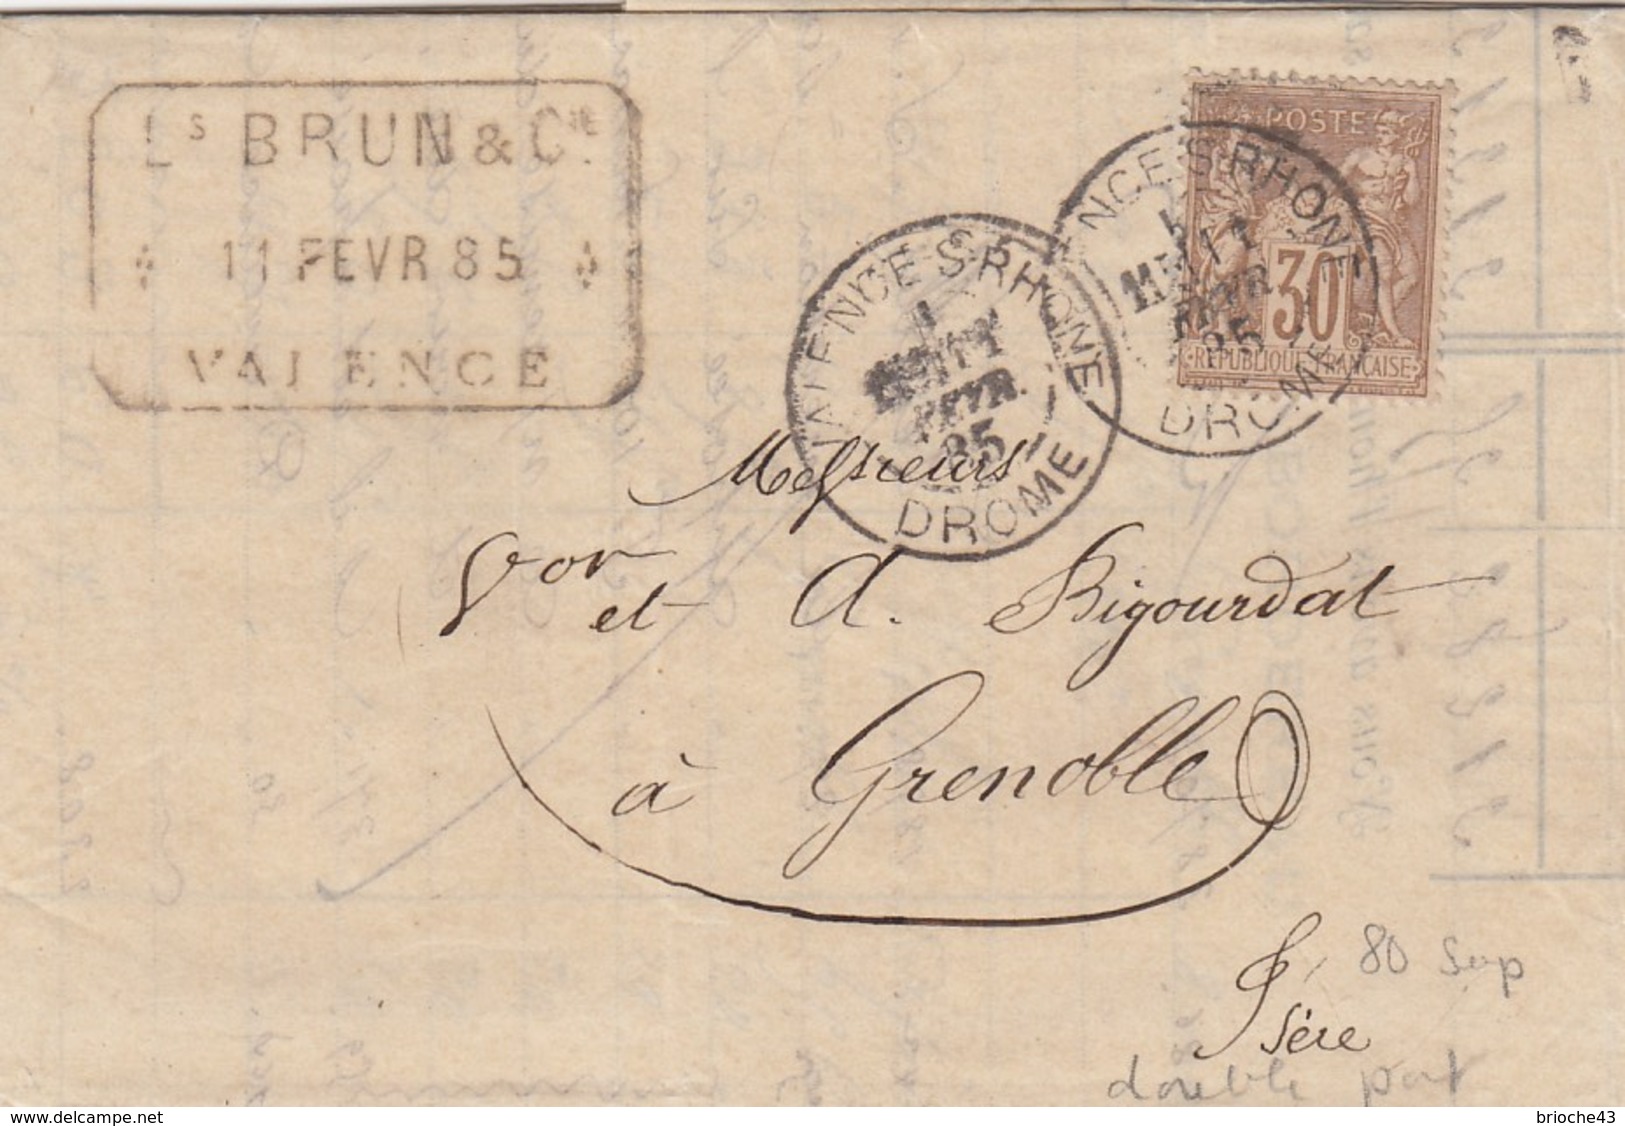 FRANCE - LETTRE Ets BRUN & Cie VALENCE 11 FEV 85 POUR GRENOBLE ISERE   / 3 - 1877-1920: Semi-moderne Periode